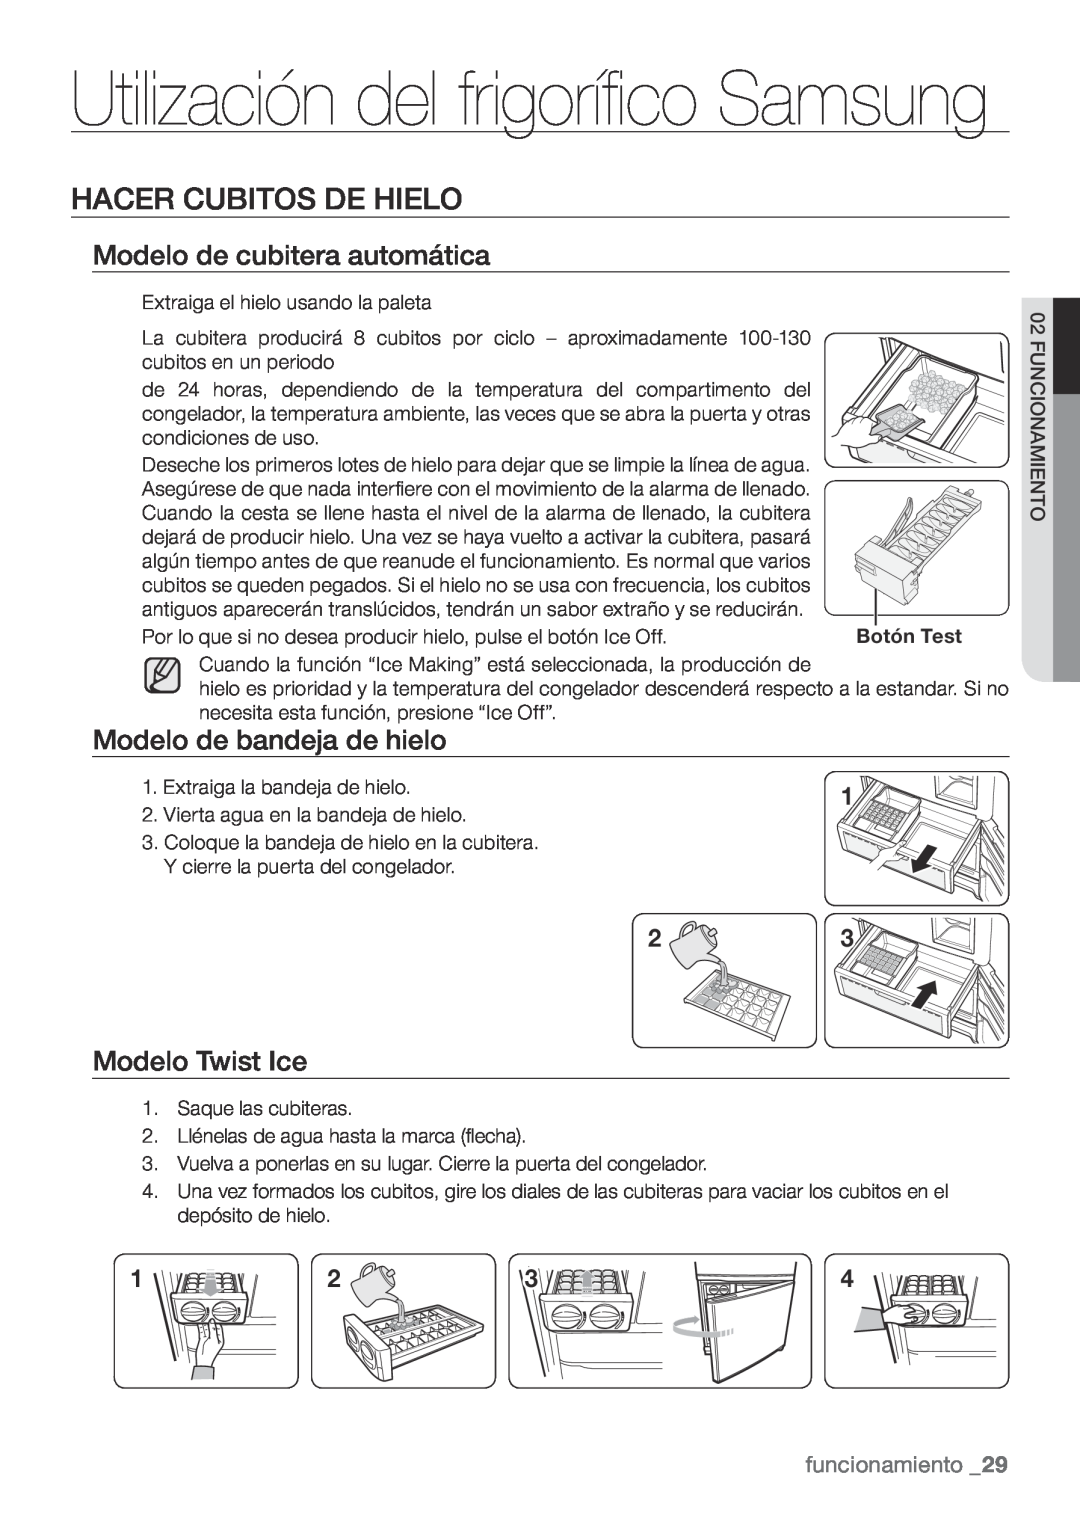 Samsung RL62VCSH1/XES manual Utilización del frigorífico Samsung, Hacer Cubitos De Hielo, Modelo de cubitera automática 